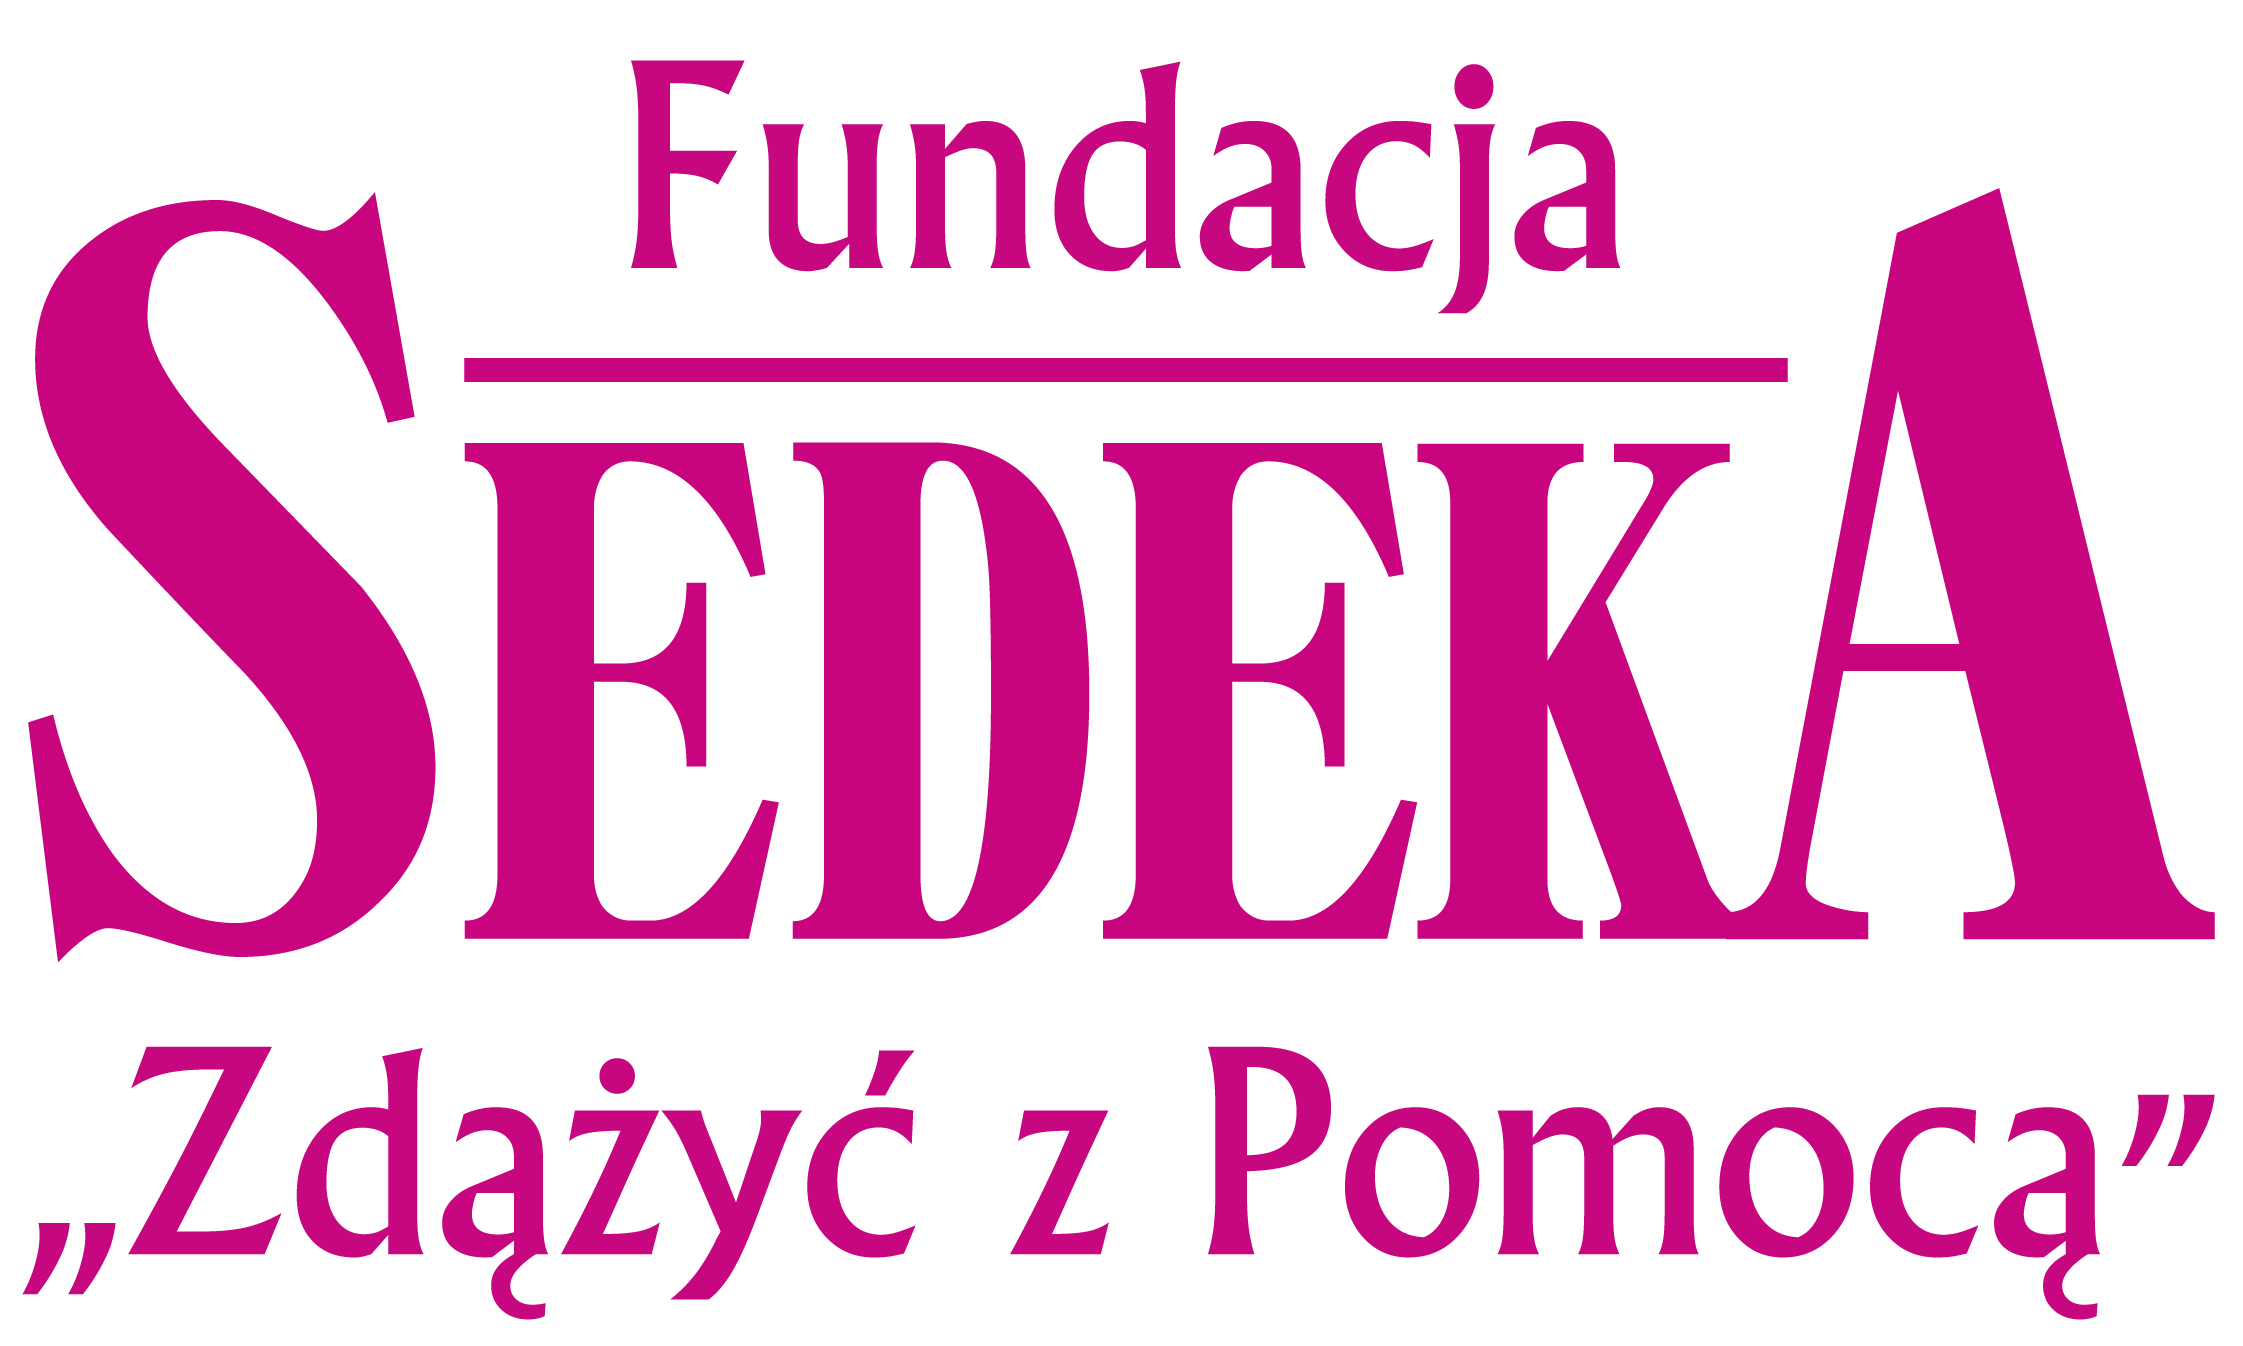 Fundacja Sedeka